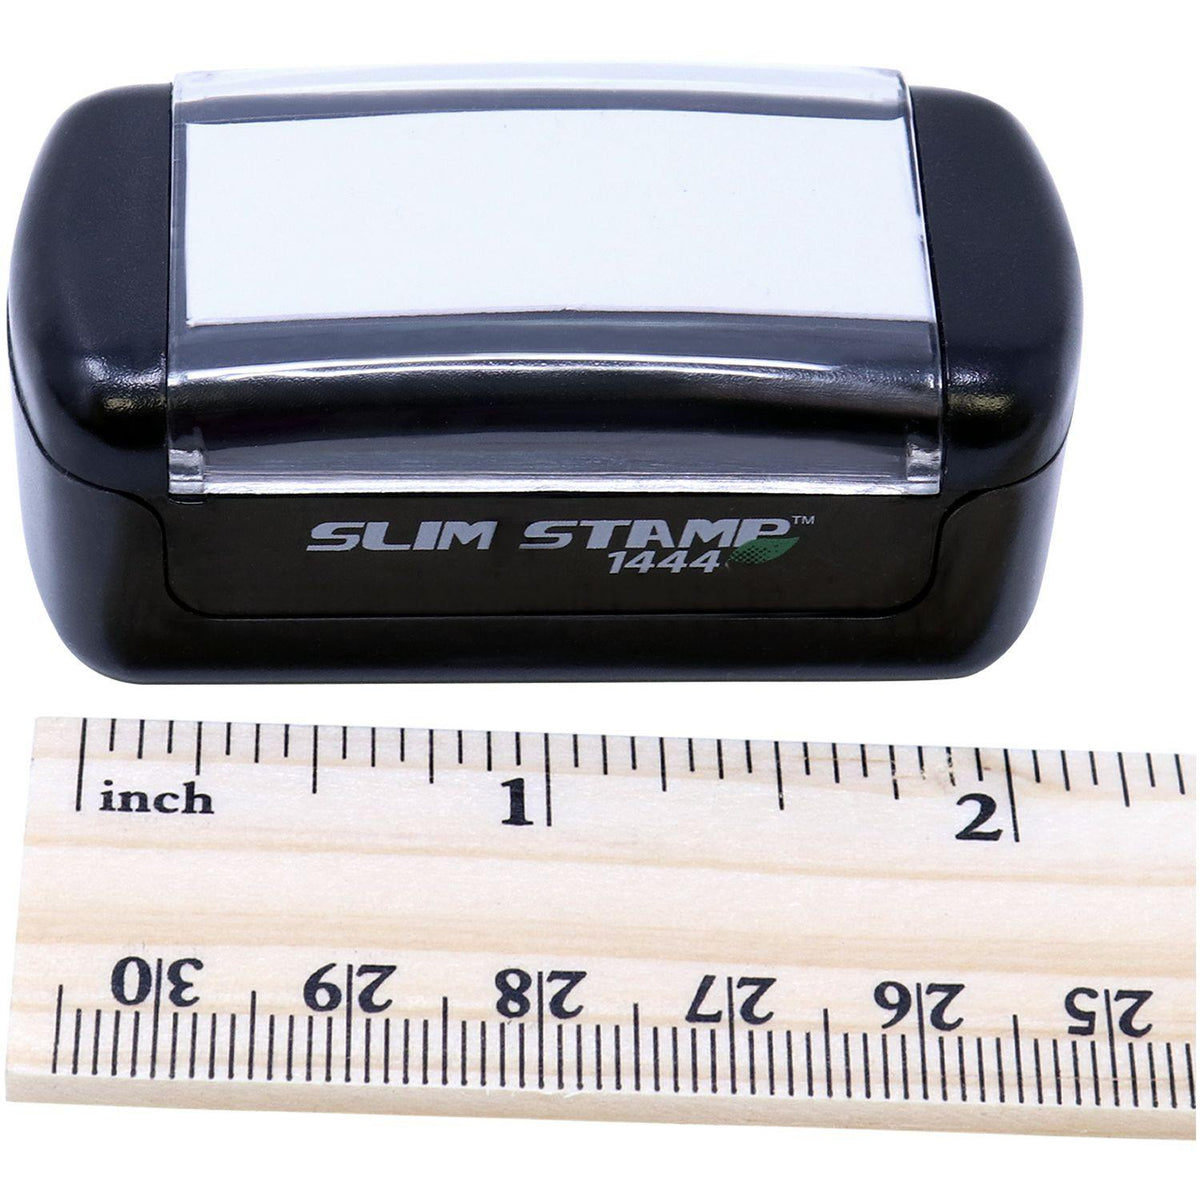 Measurement Slim Pre-Inked Duplicado Stamp with Ruler